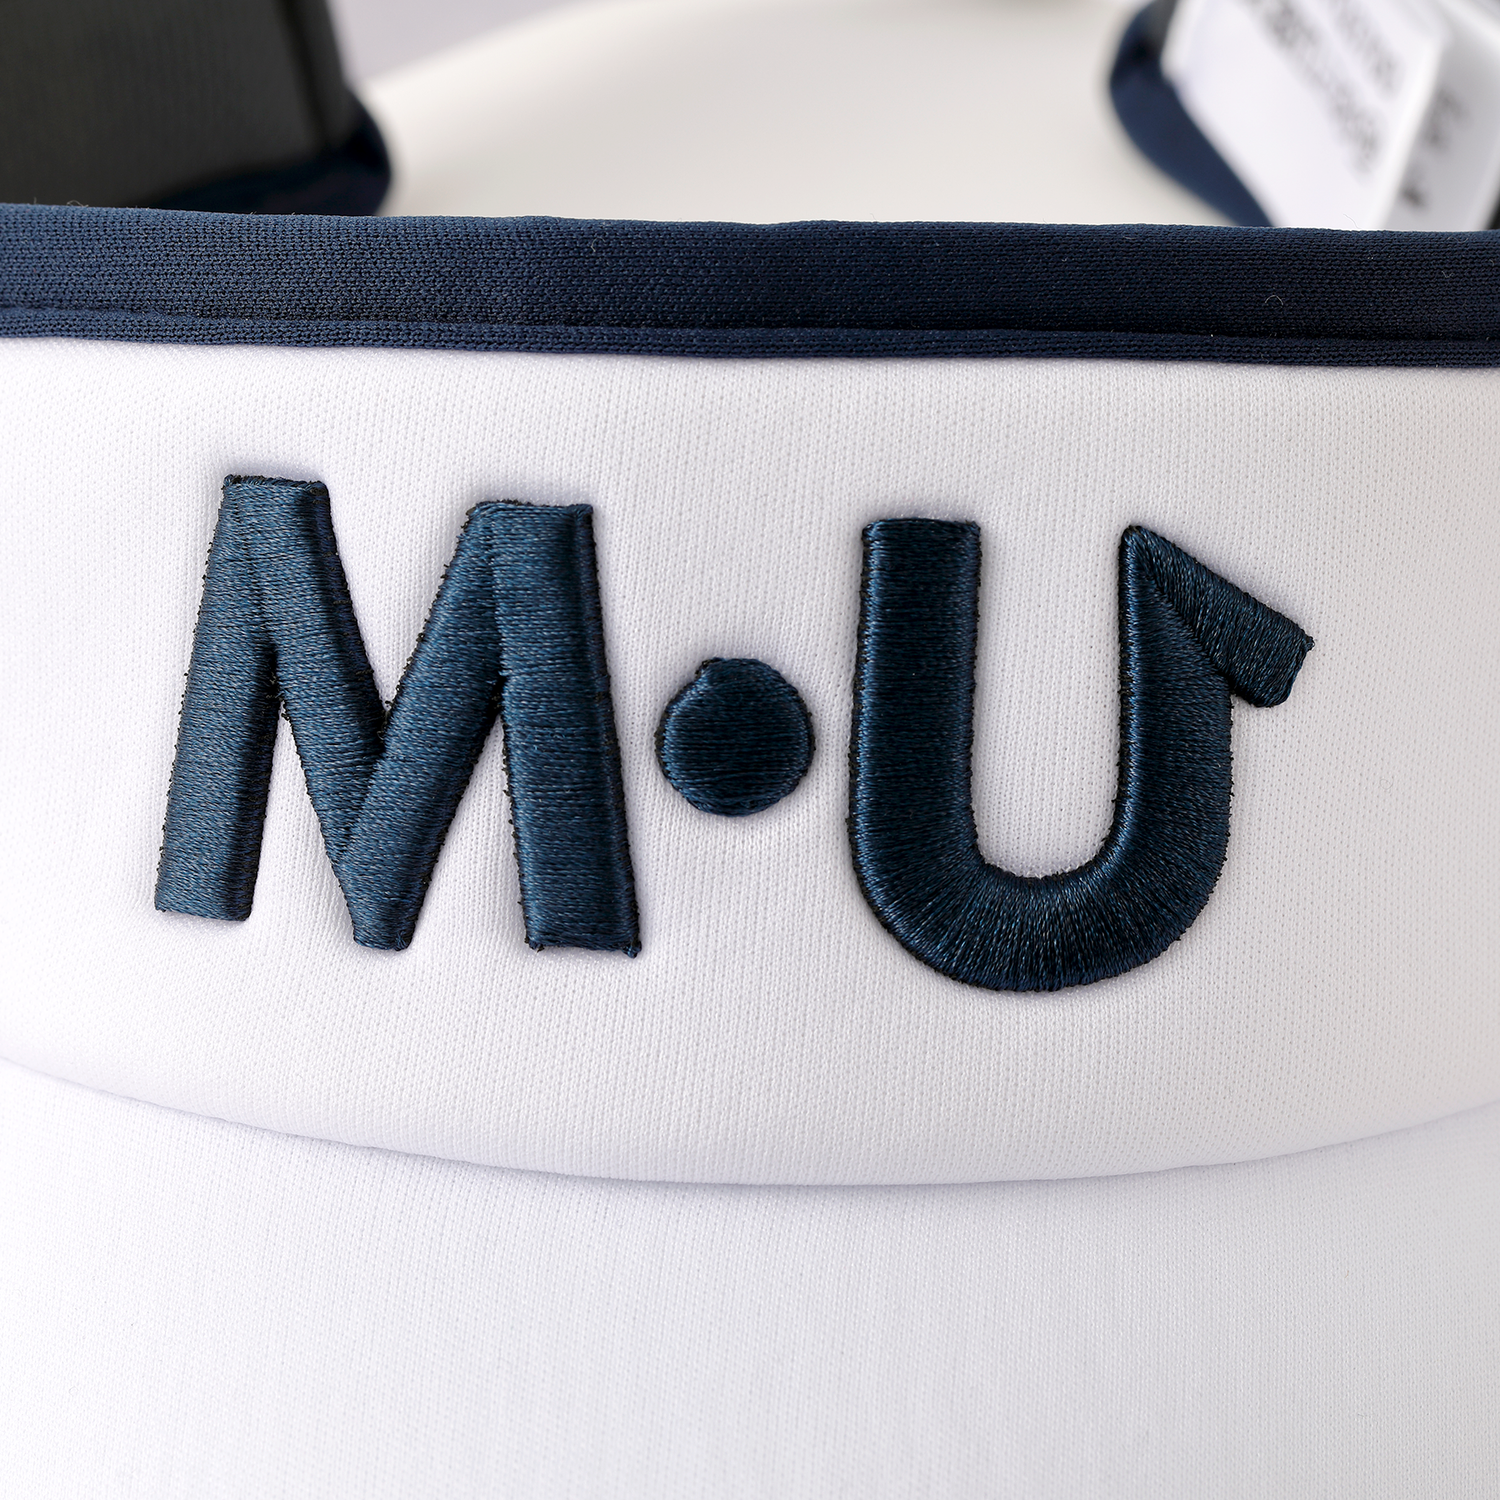 White x navy logo embroidered sun visor (801Q3700)